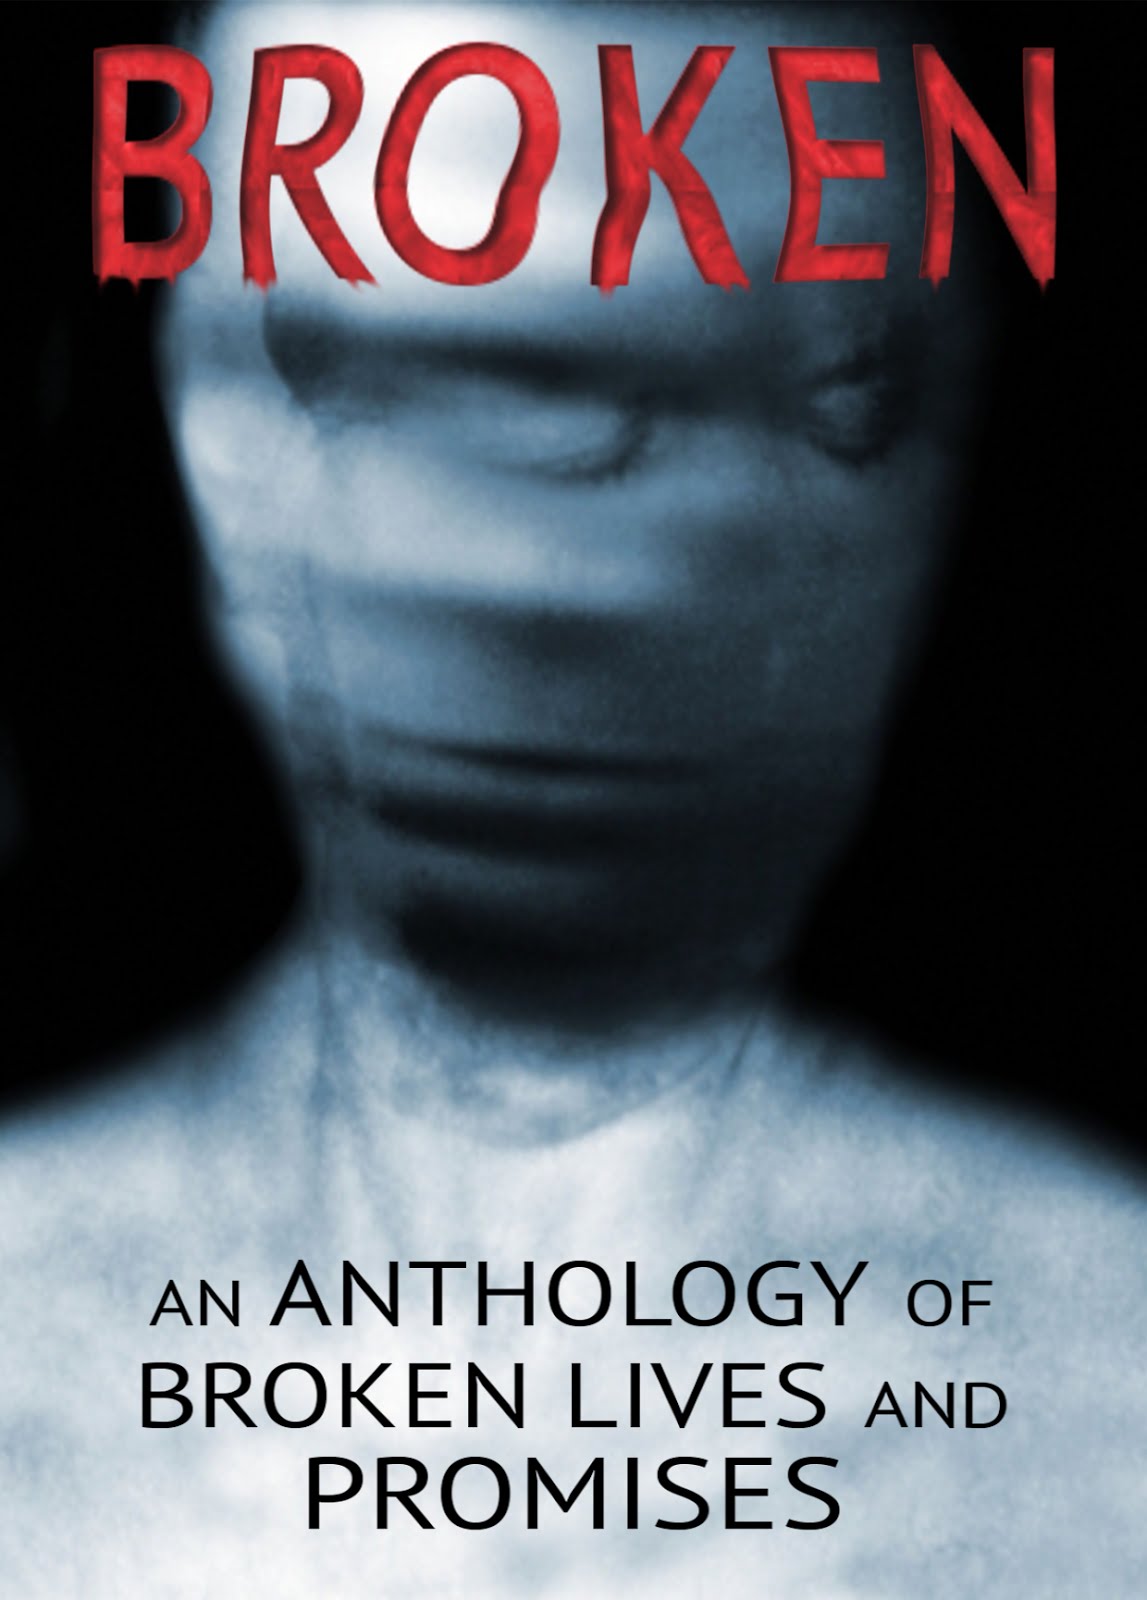 Broken - An Anthology